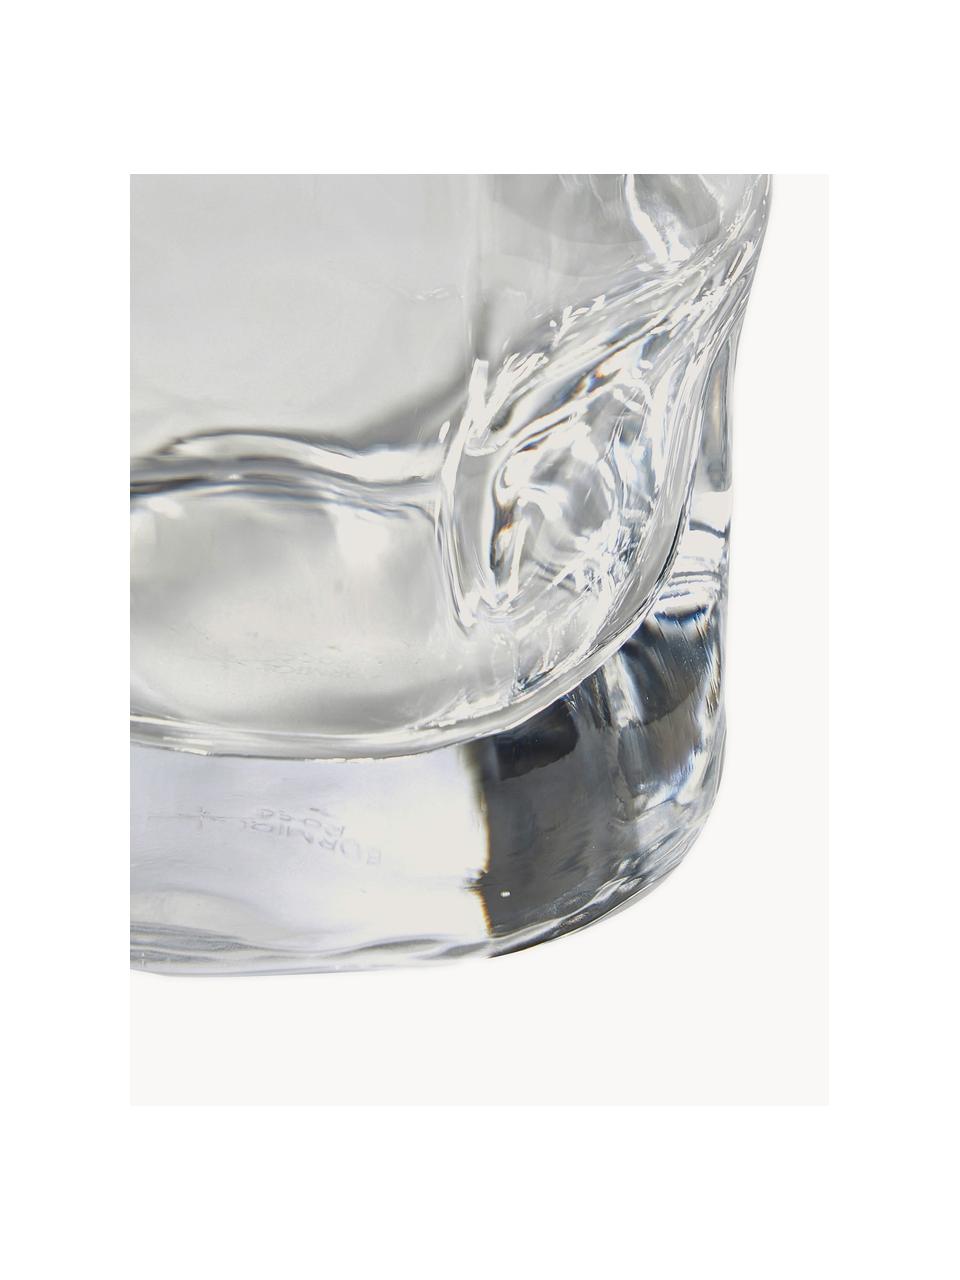 Vasos de forma orgánica Sorgente, 6 uds., Vidrio, Transparente, Ø 7 x Al 11 cm, 300 ml